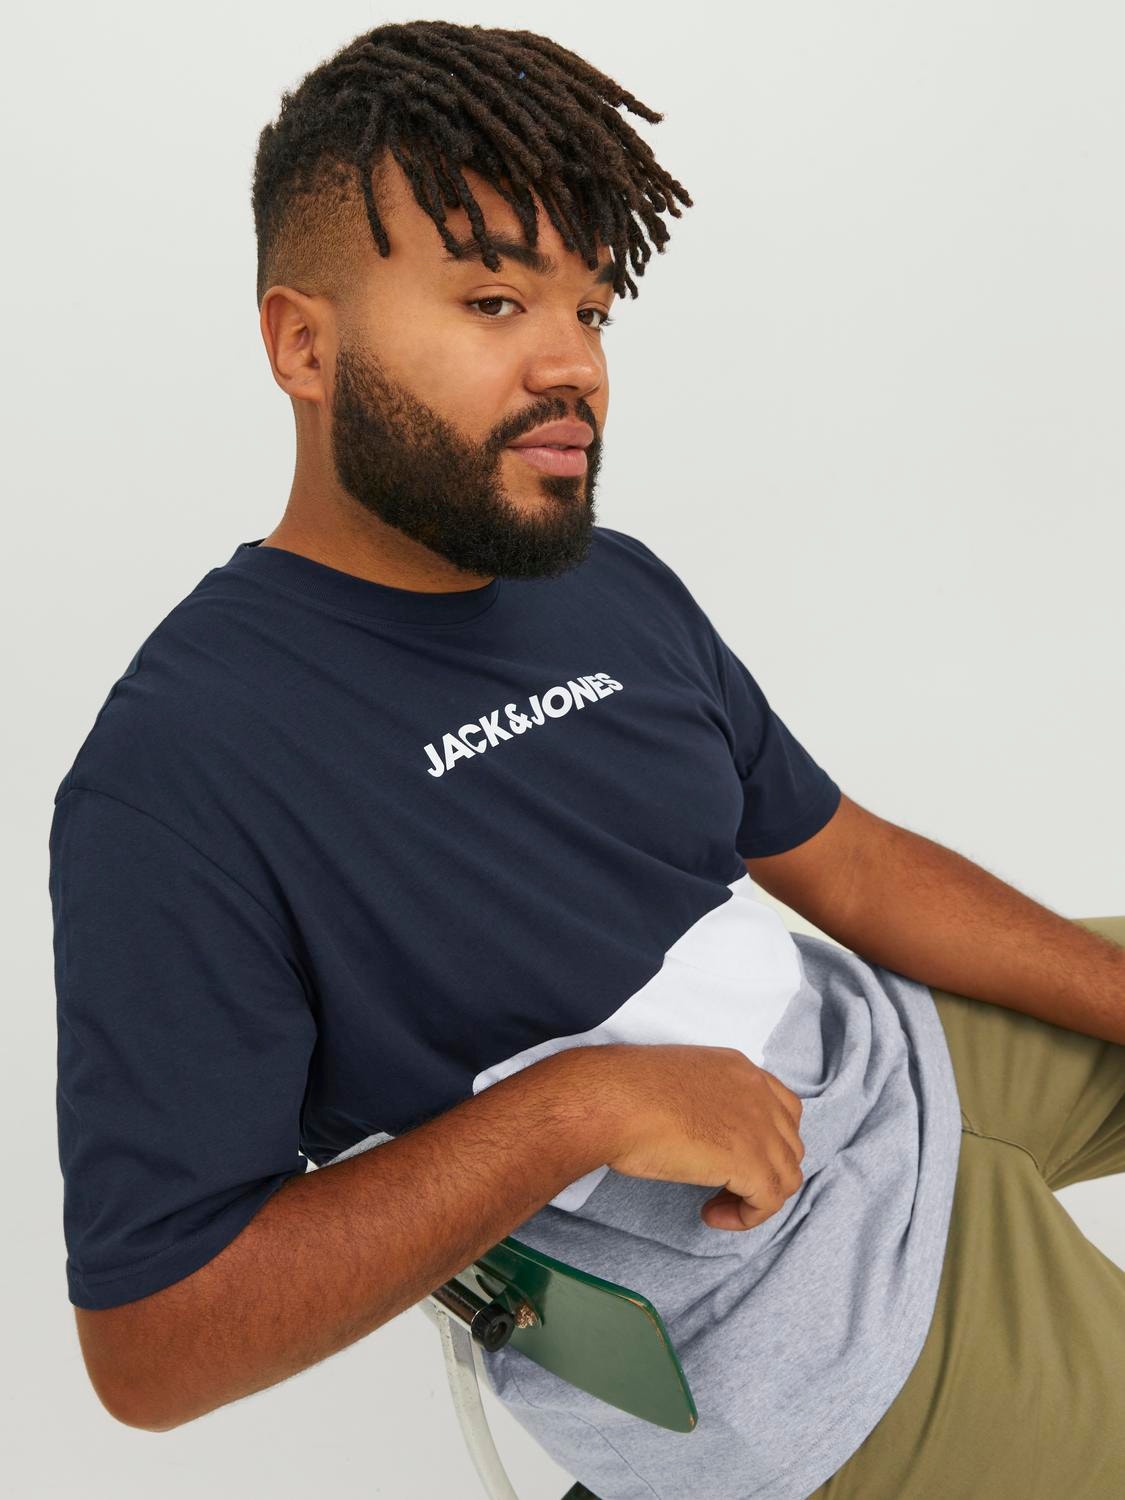 Jack & Jones Plus Size Colour block T-shirt -Navy Blazer - 12243653